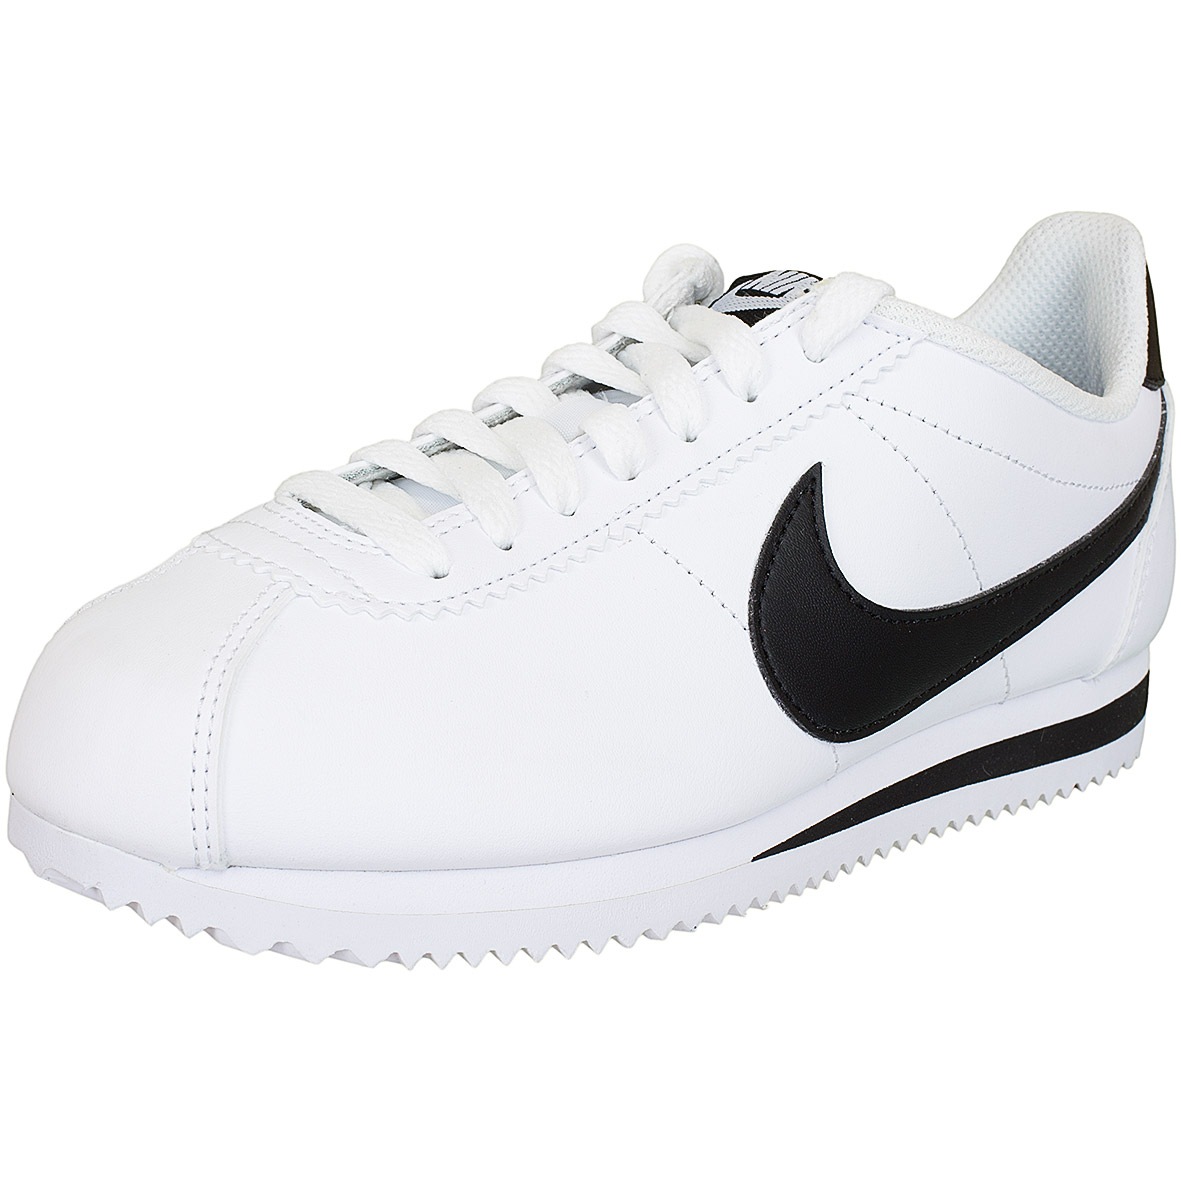 ☆ Nike Damen Sneaker Classic Cortez Leather weiß/schwarz - hier bestellen!